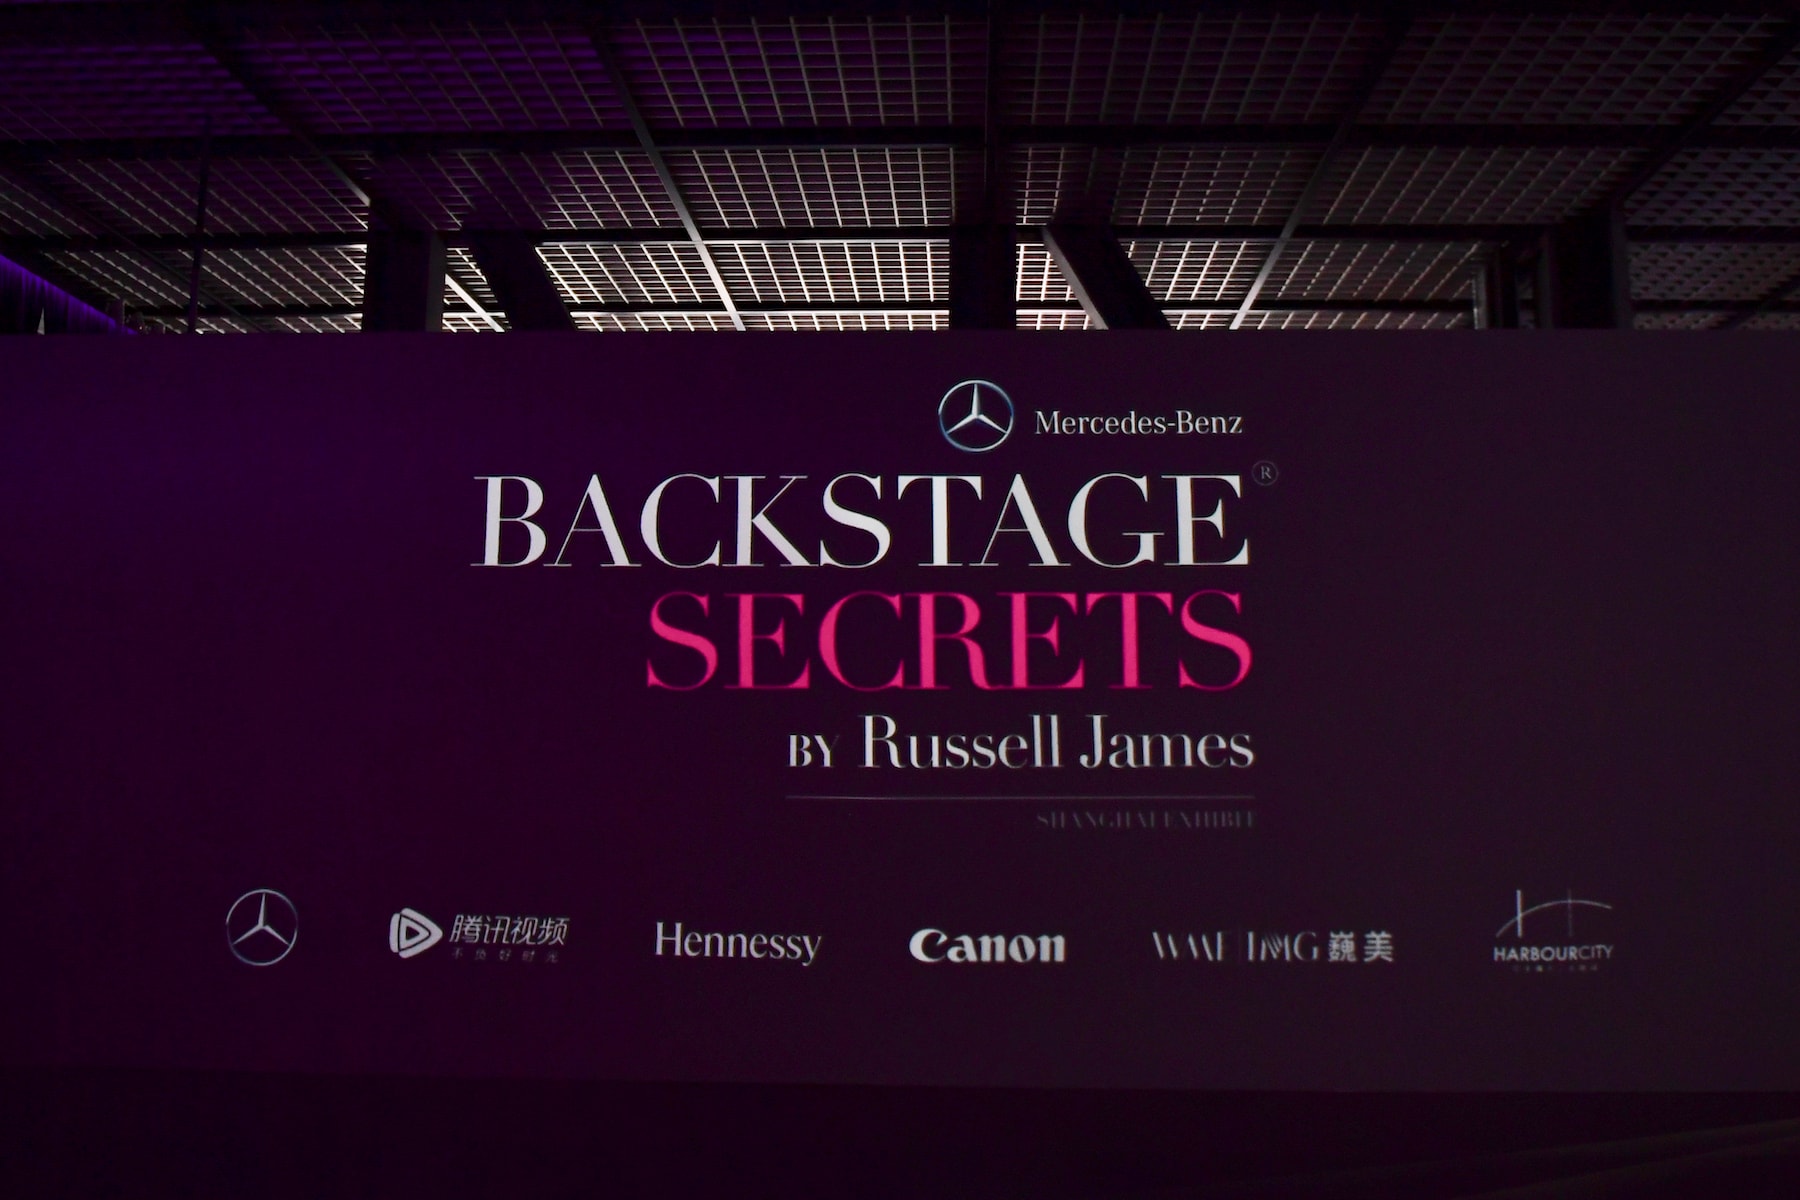 Victoria’s Secret 御用攝影師 Russell James 上海展覽及新書發佈會現場回顧